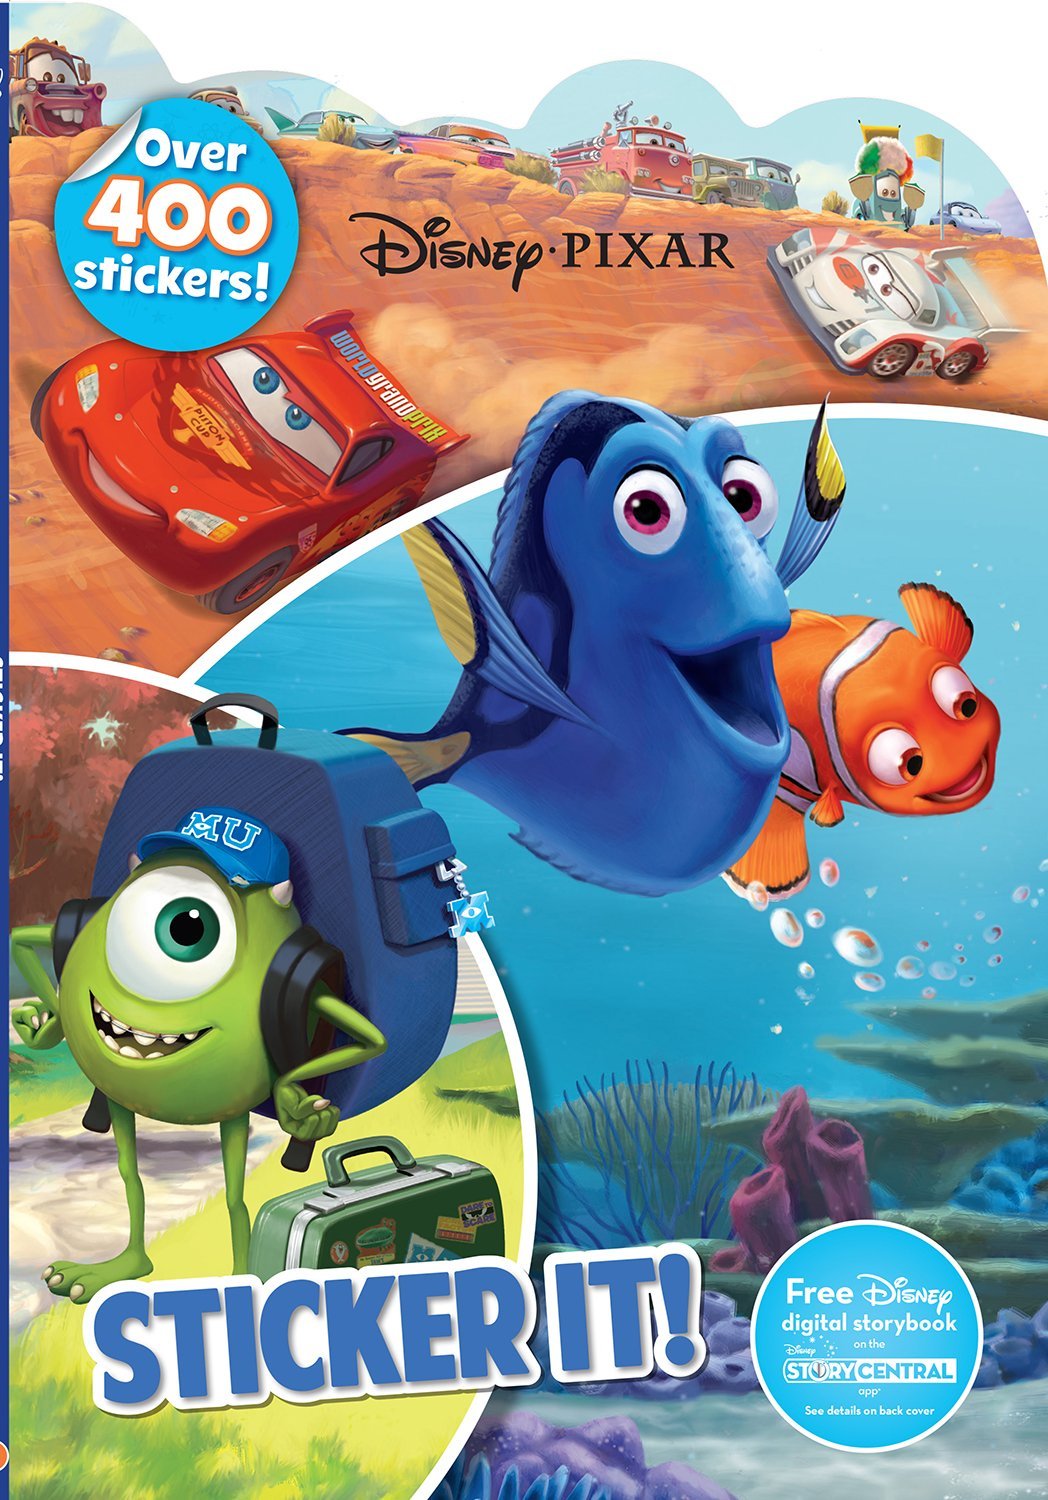 Disney Pixar Sticker It!